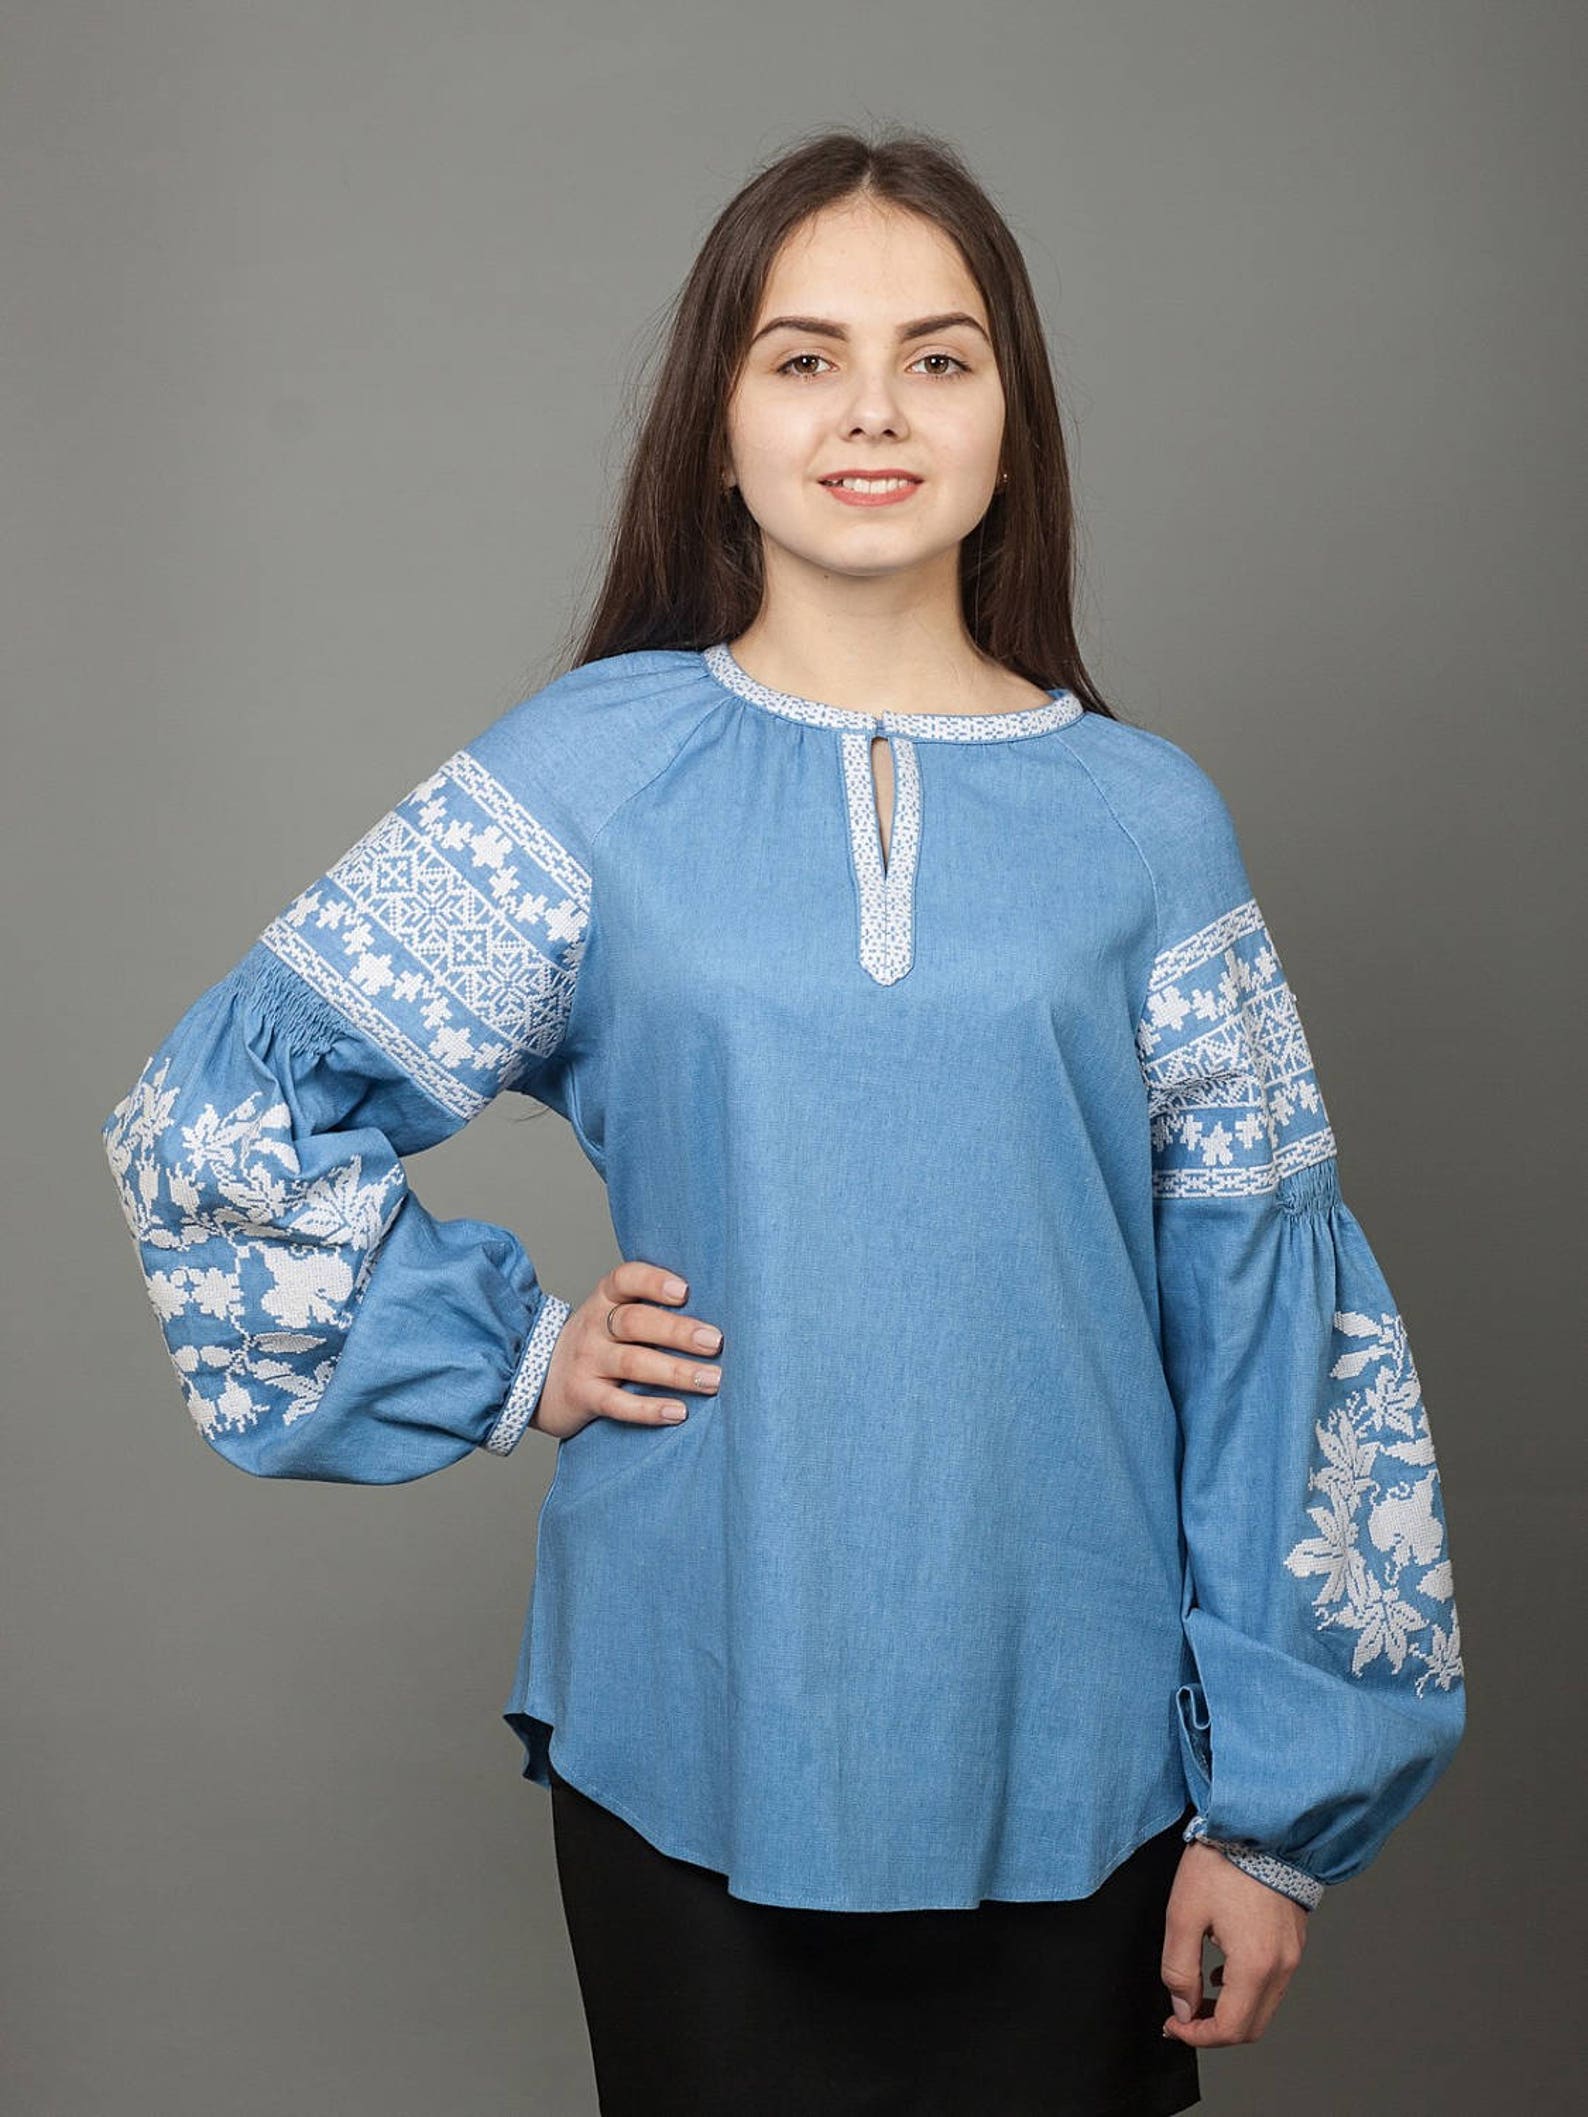 Women Vyshyvanka. Traditional Ukrainian Women's Blouse. - Etsy